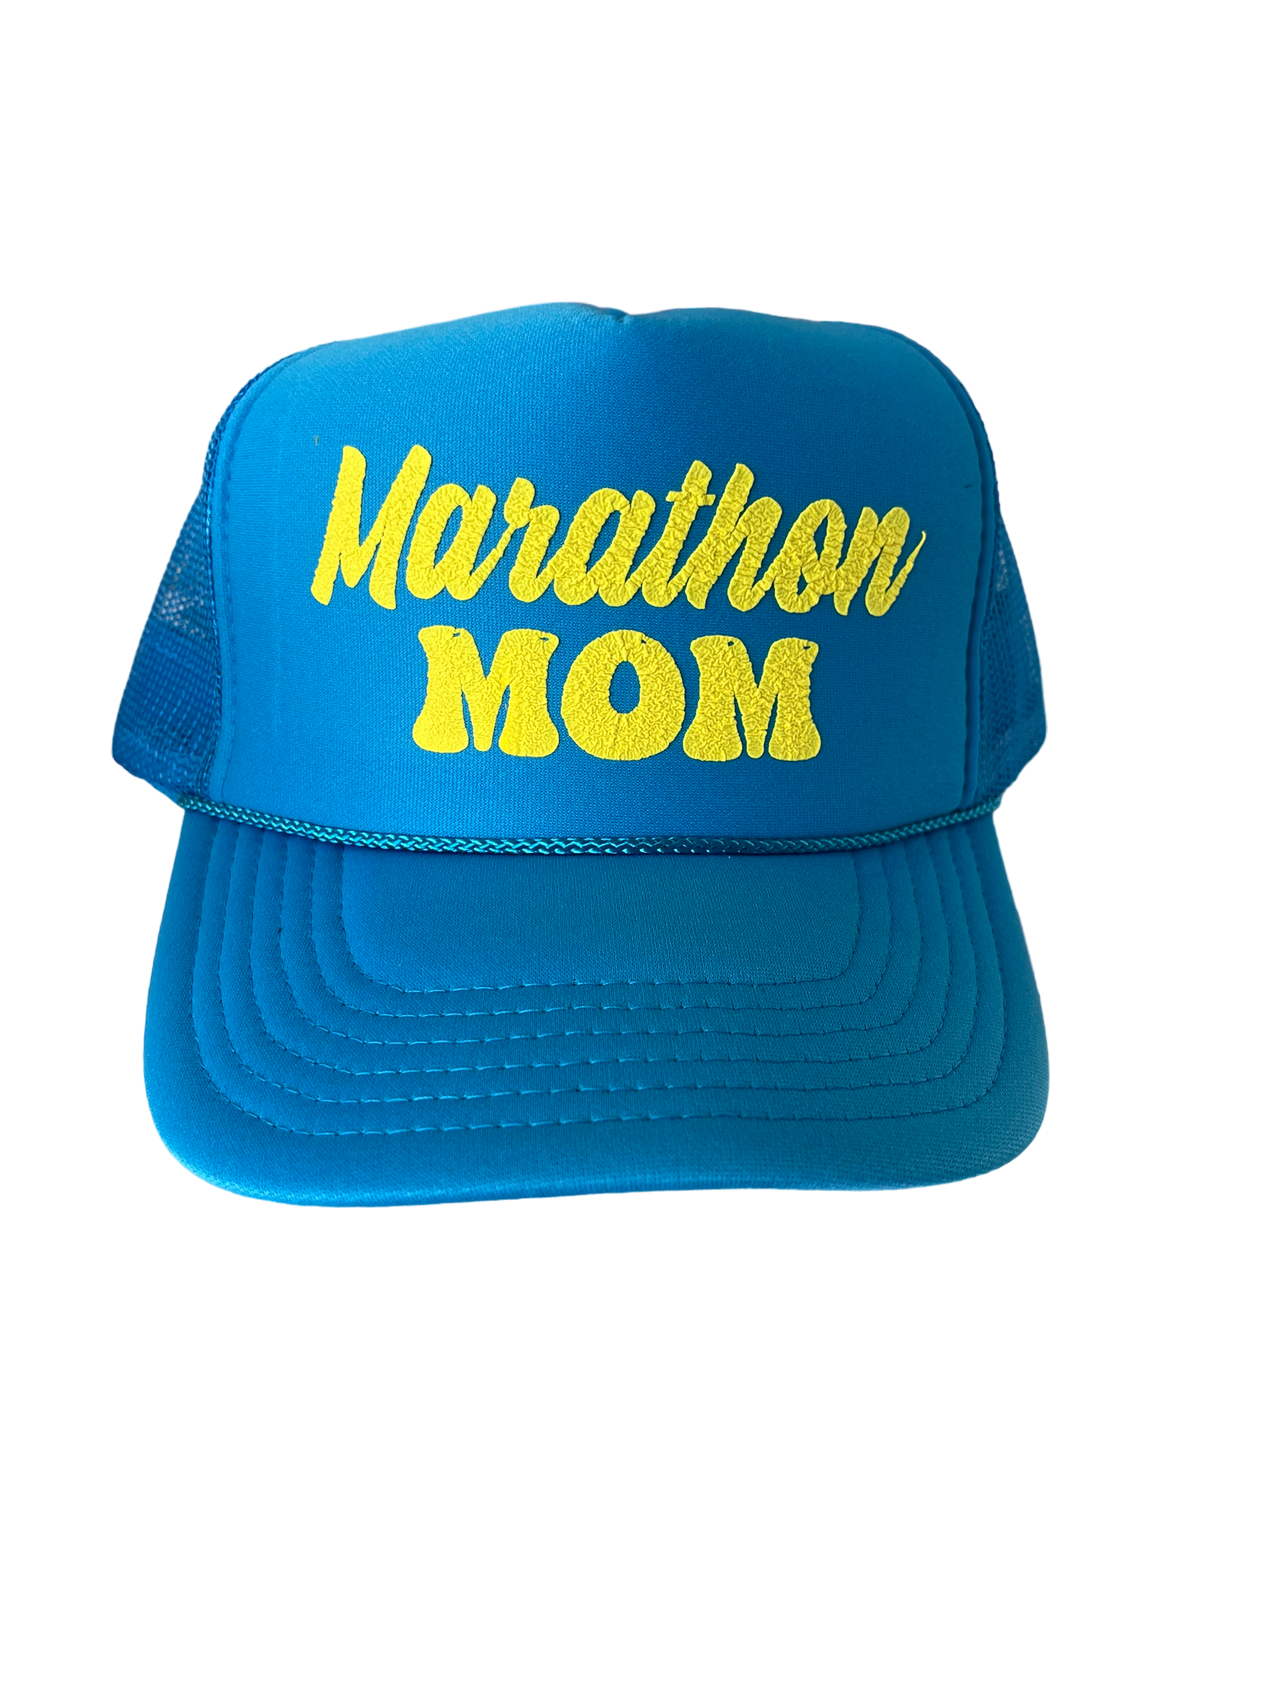 Marathon Mom - Puffy Trucker